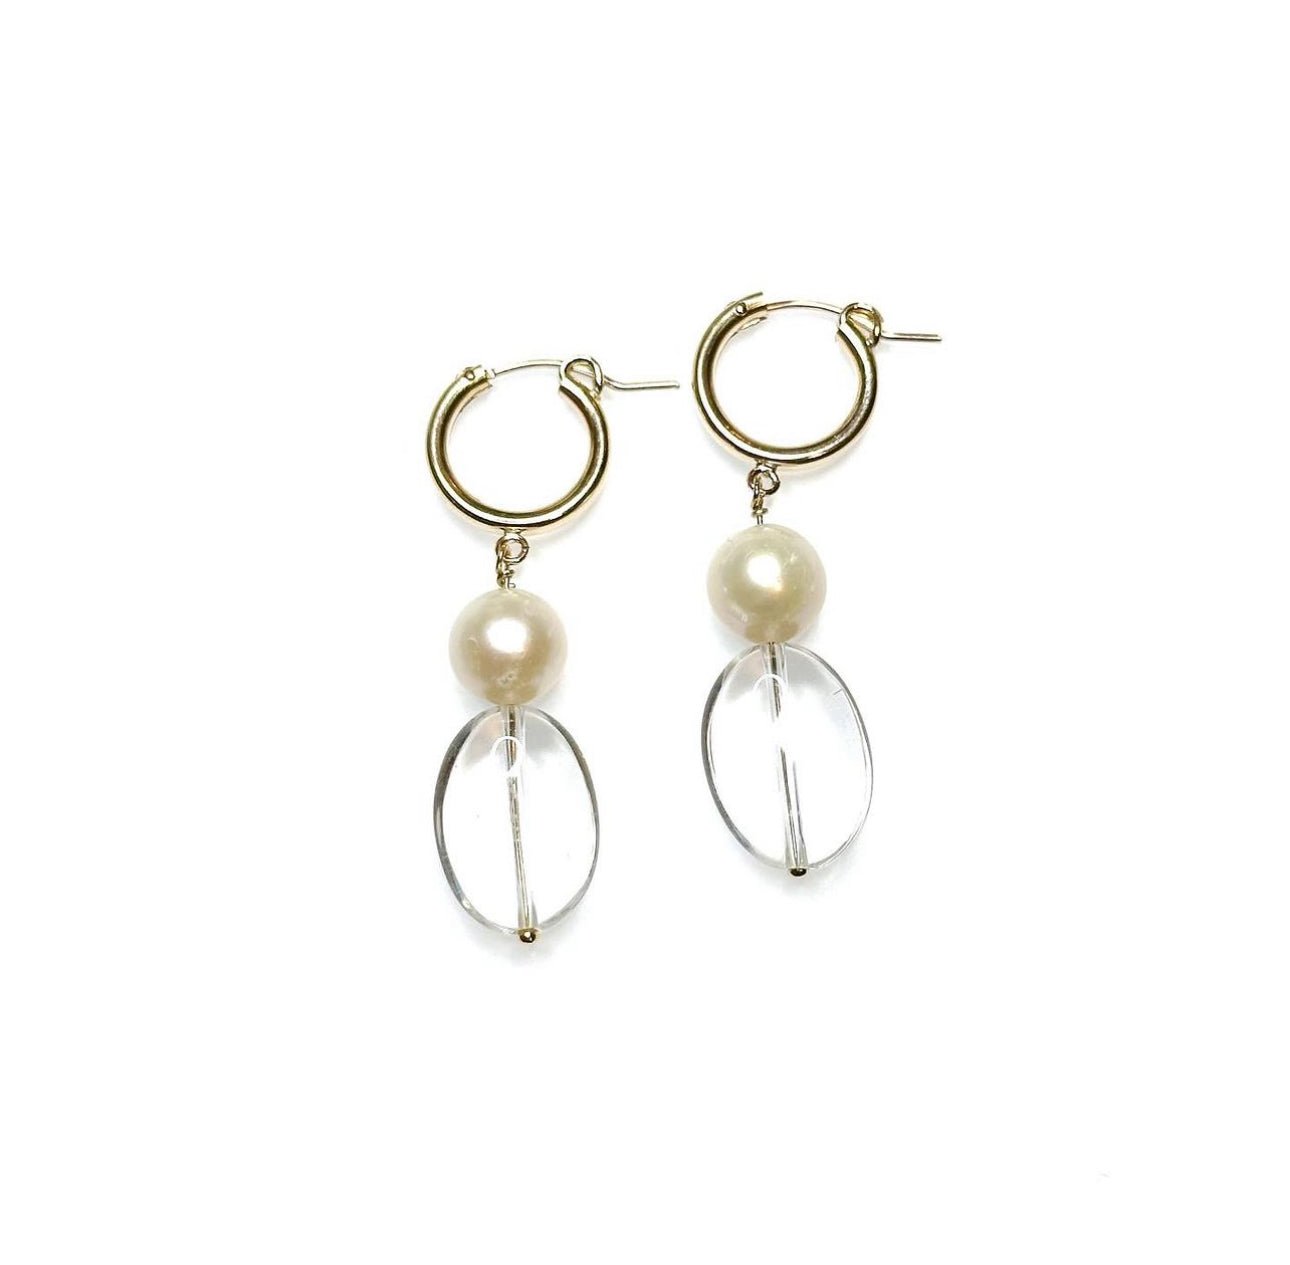 Pearl people earrings 2.0 (tarnish resistant 14K gold-filled)